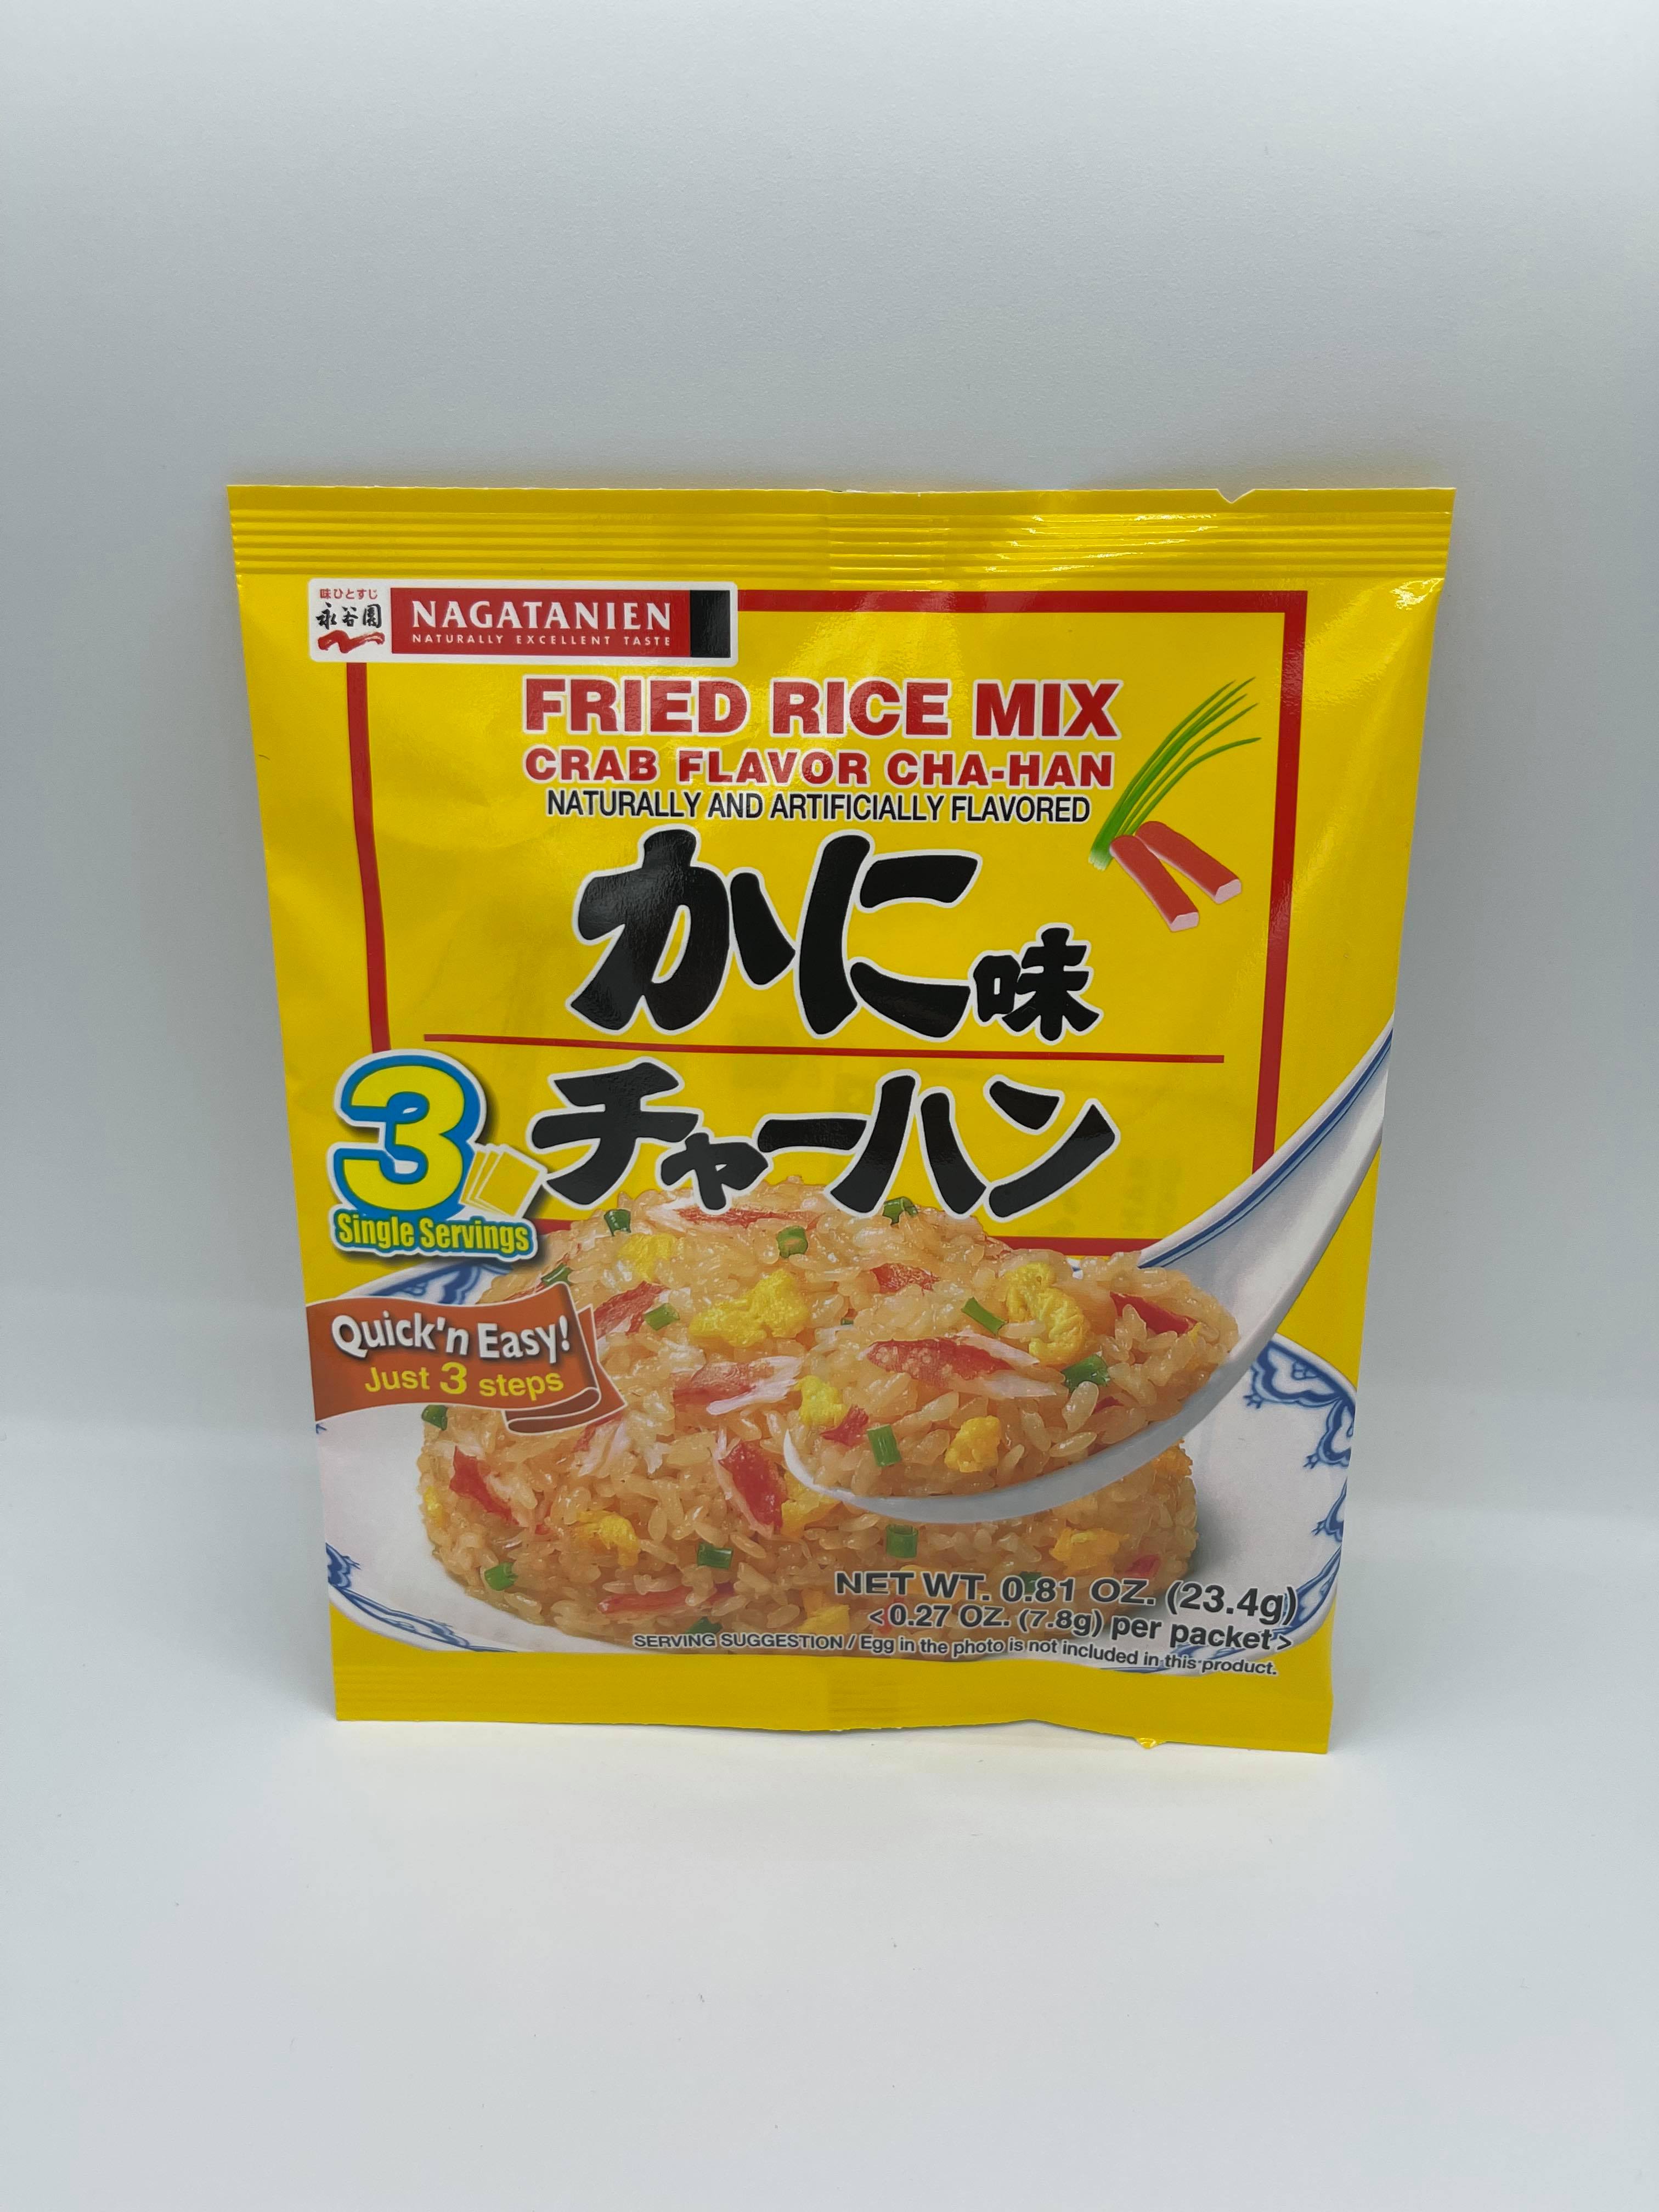 Fried Rice Mix - Crab Flavor Cha-Han